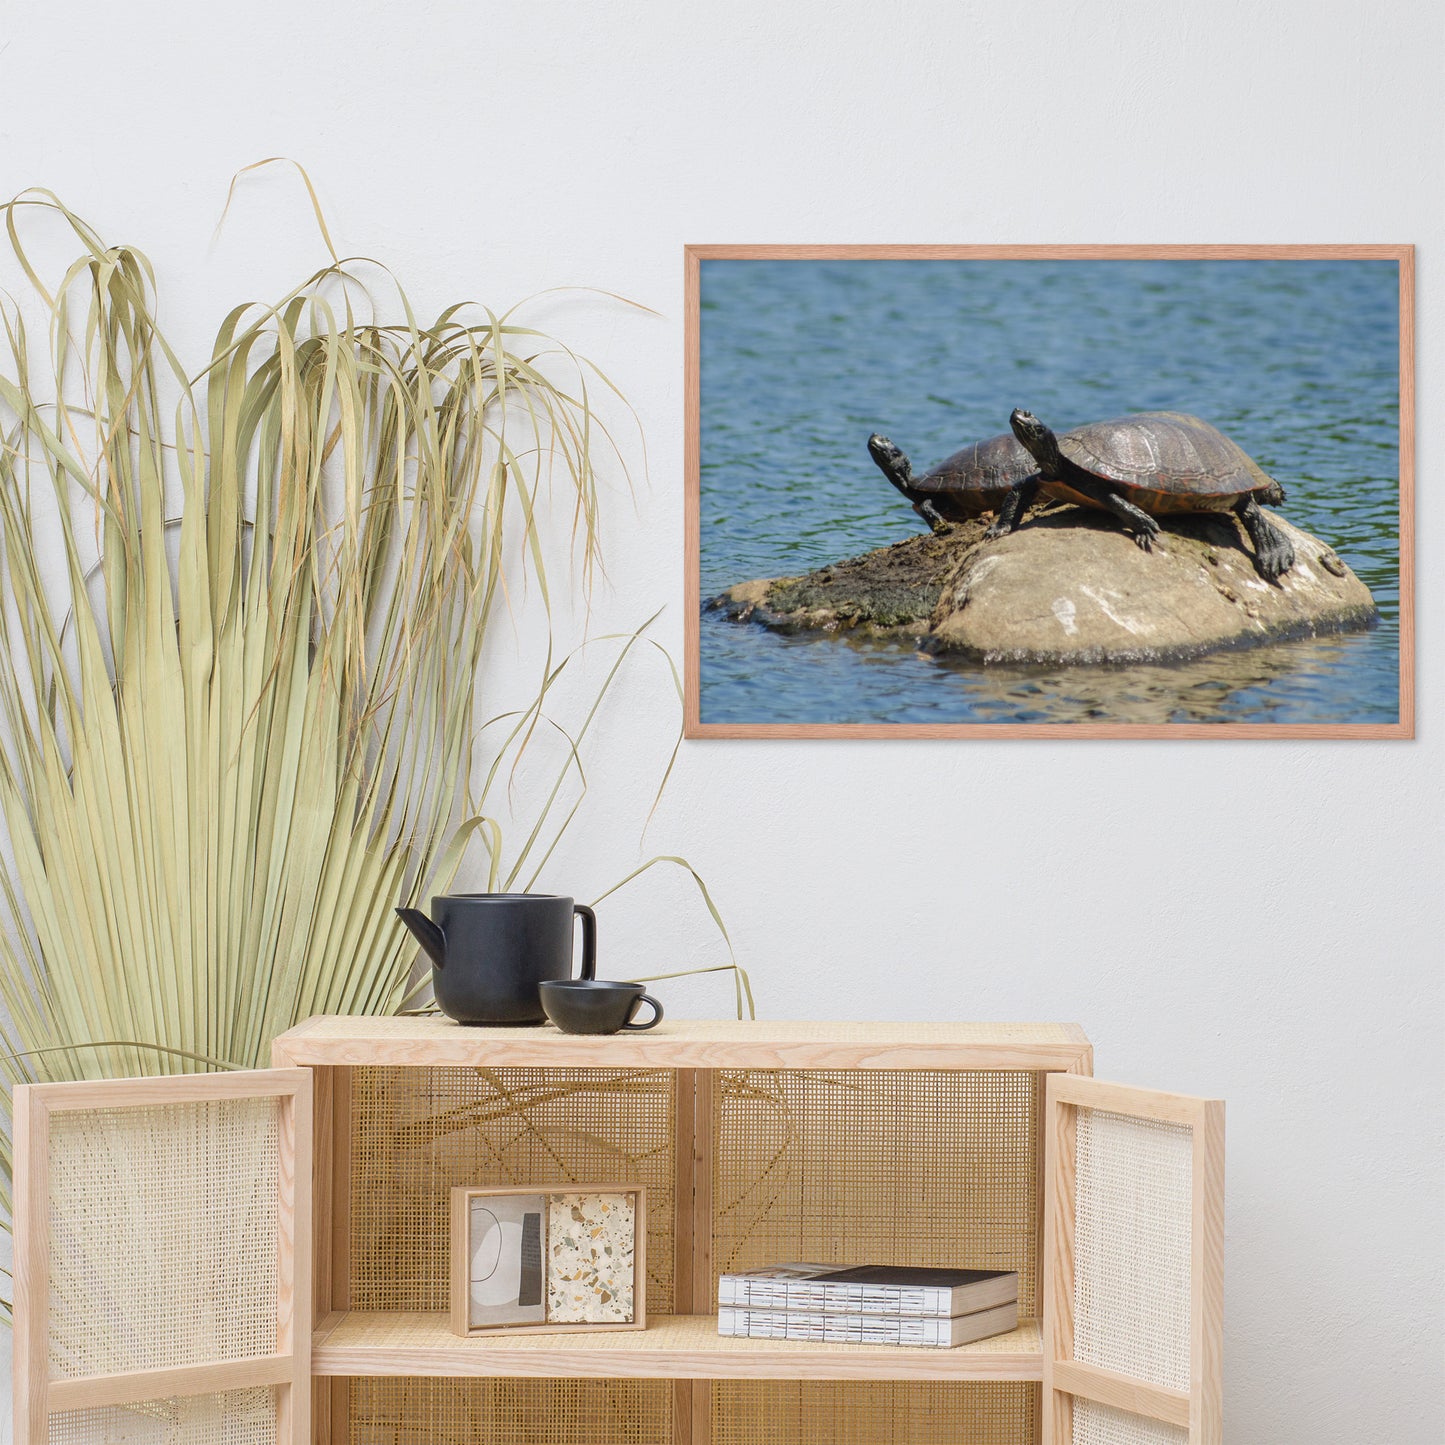 Sunshine Rock with Turtles Animal Wildlife Photograph Framed Wall Art Prints